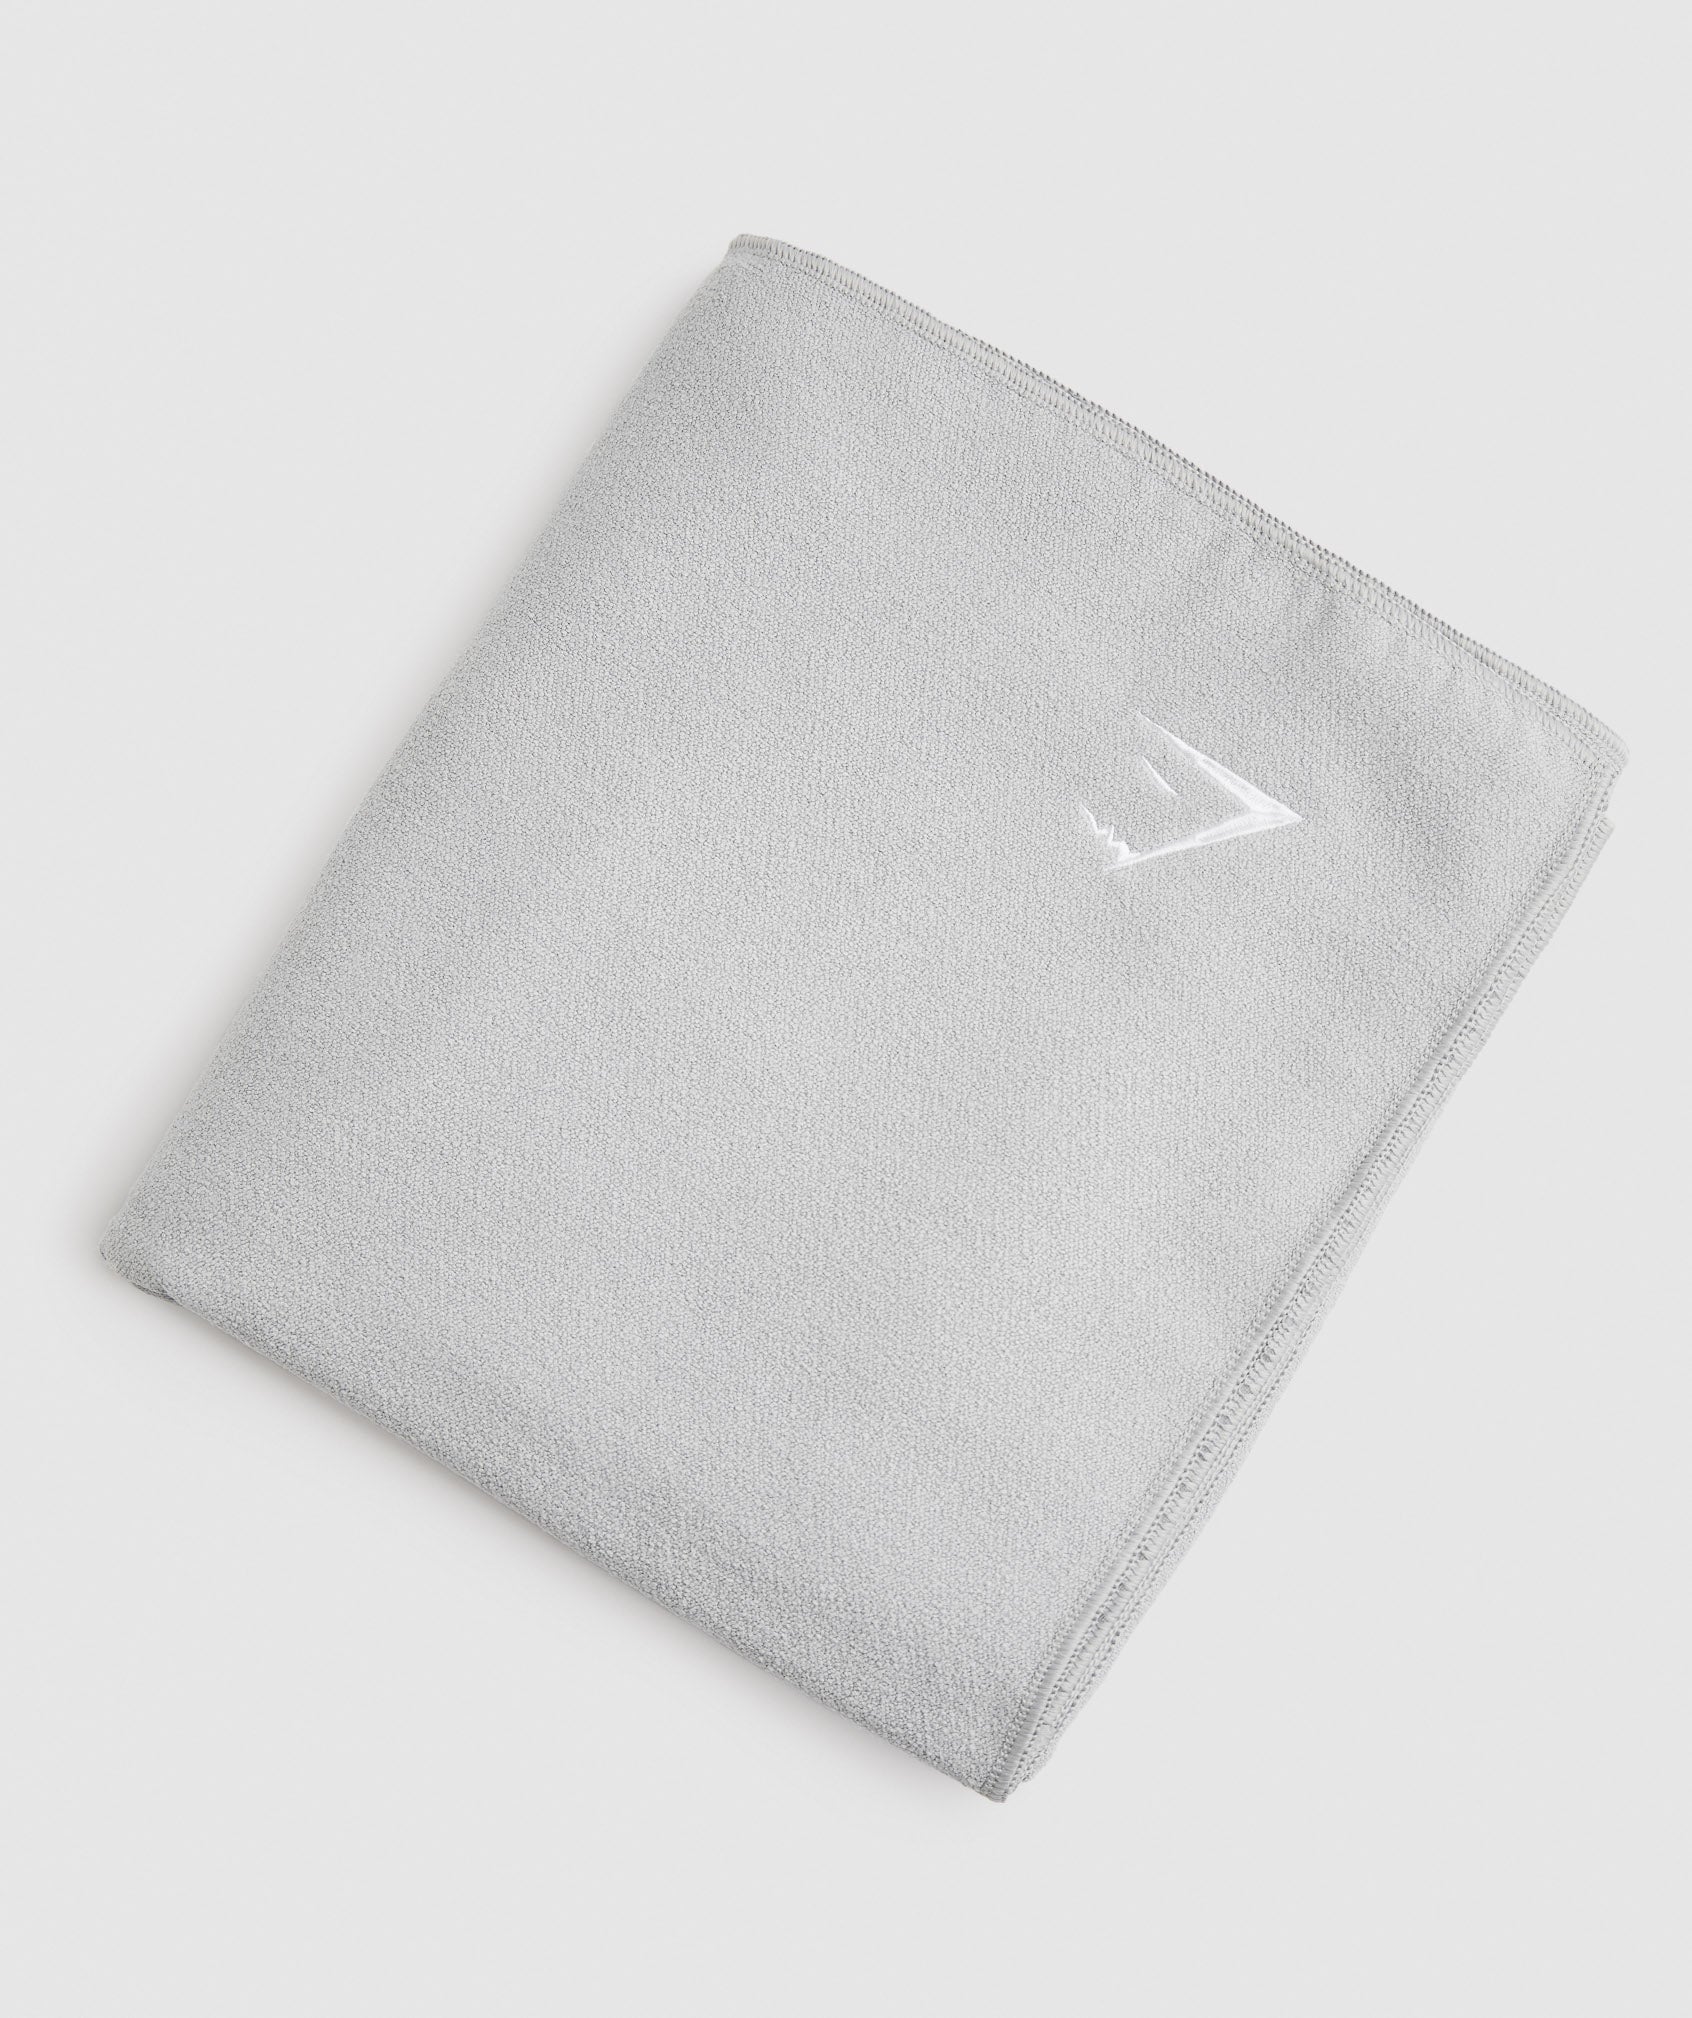 Studio Mat Towel in Light Grey - view 2